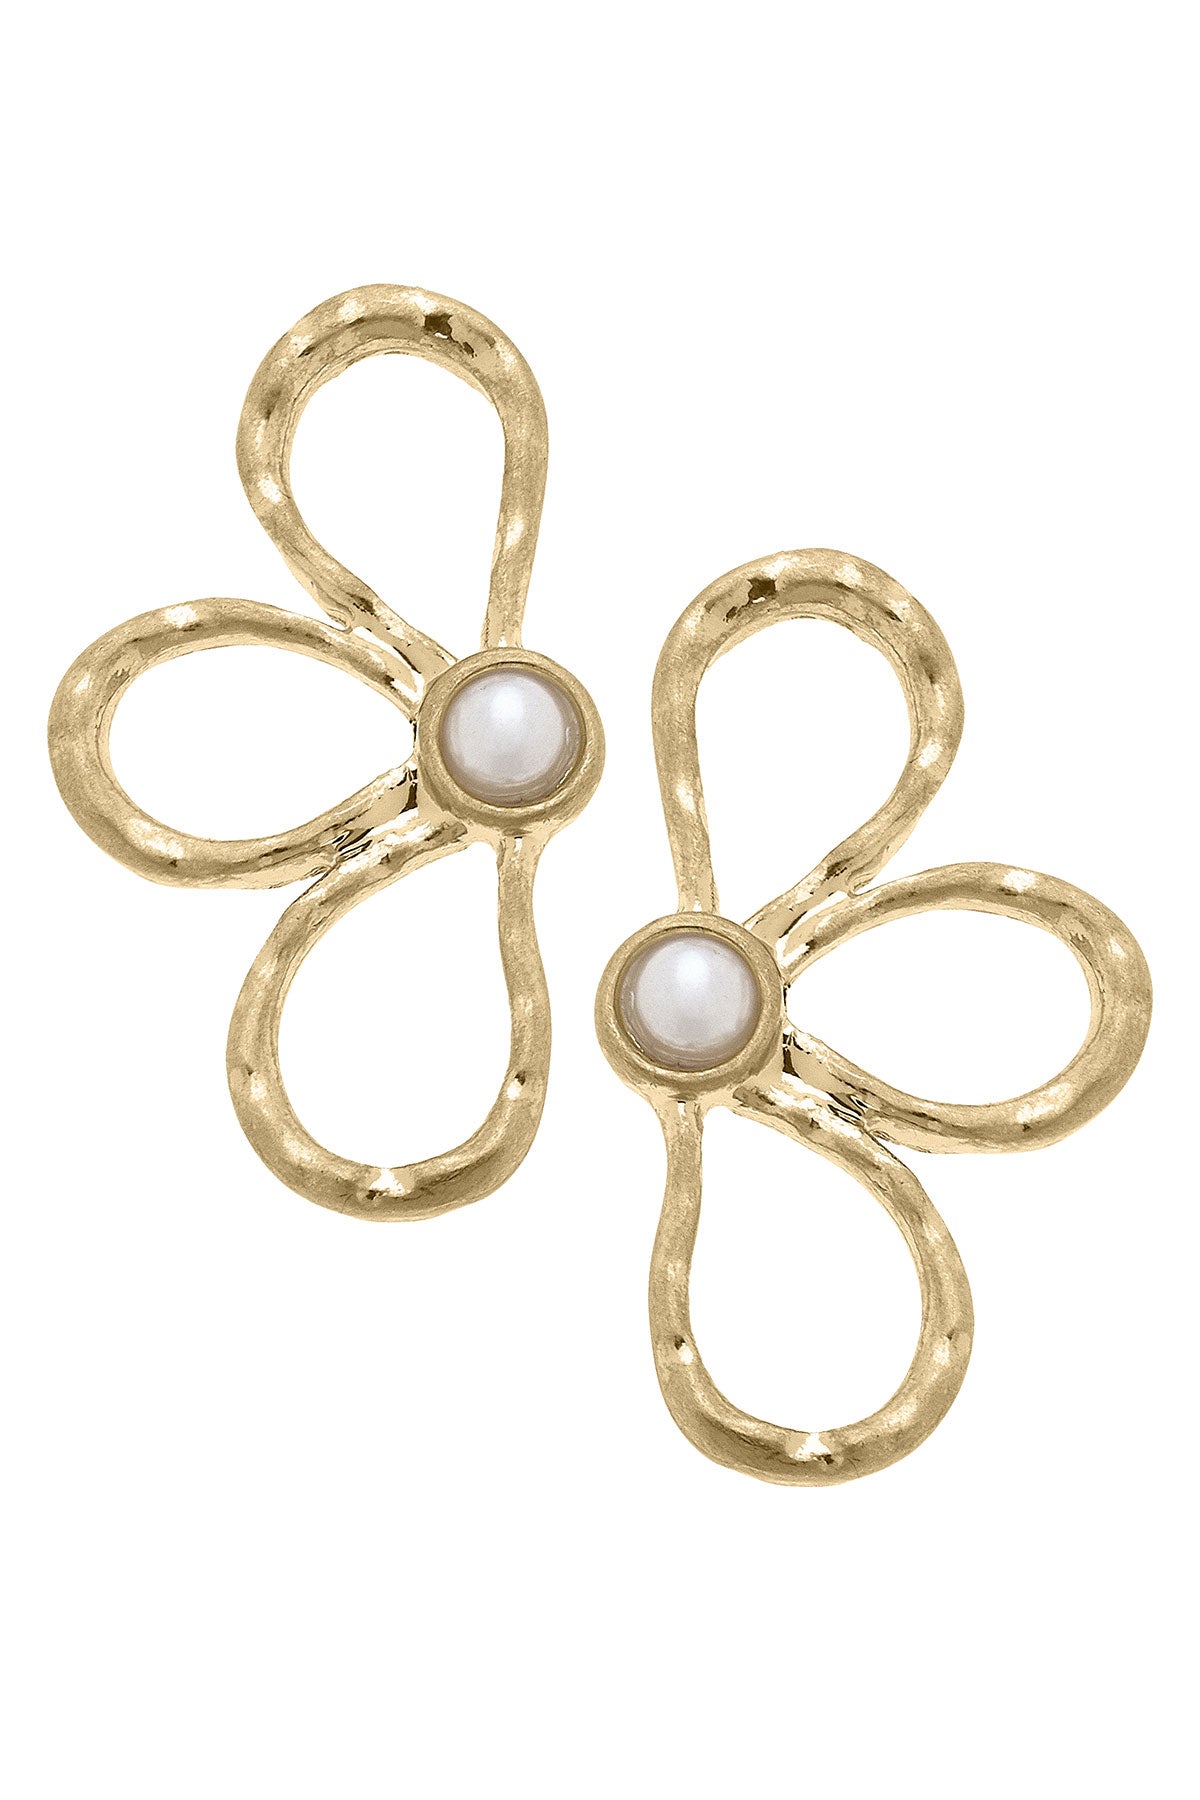 Luna Floral Statement Stud Earrings in Worn Gold